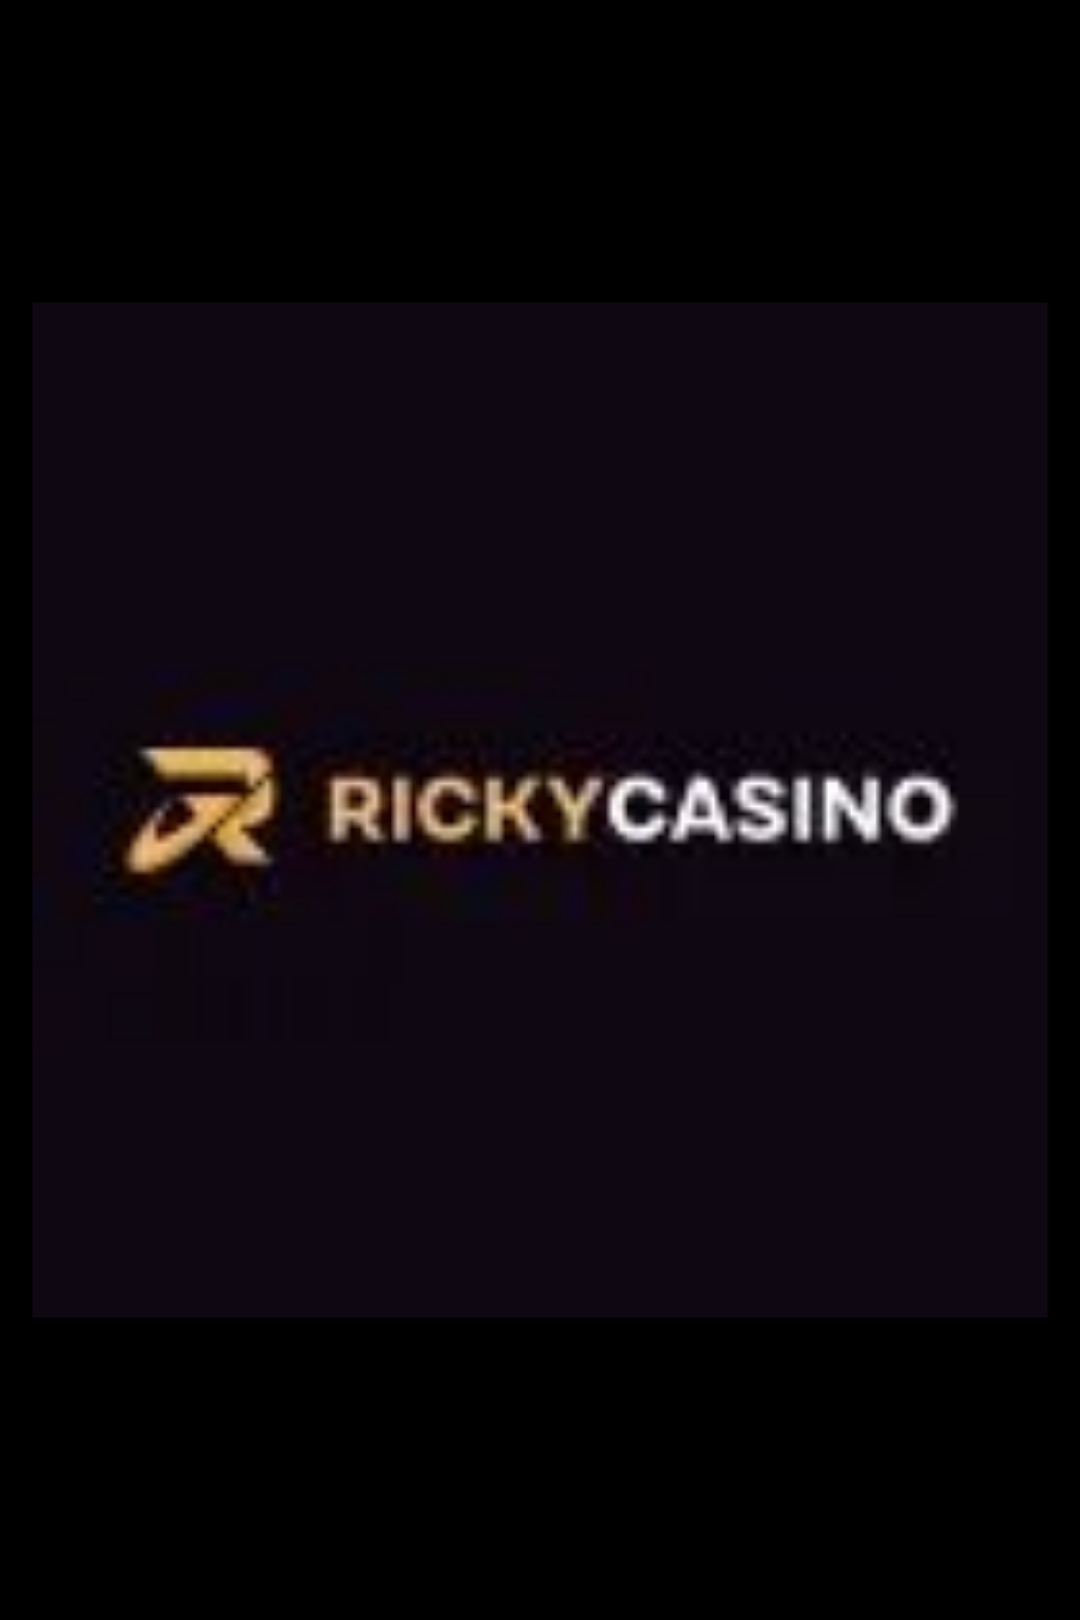 Ricky Casino